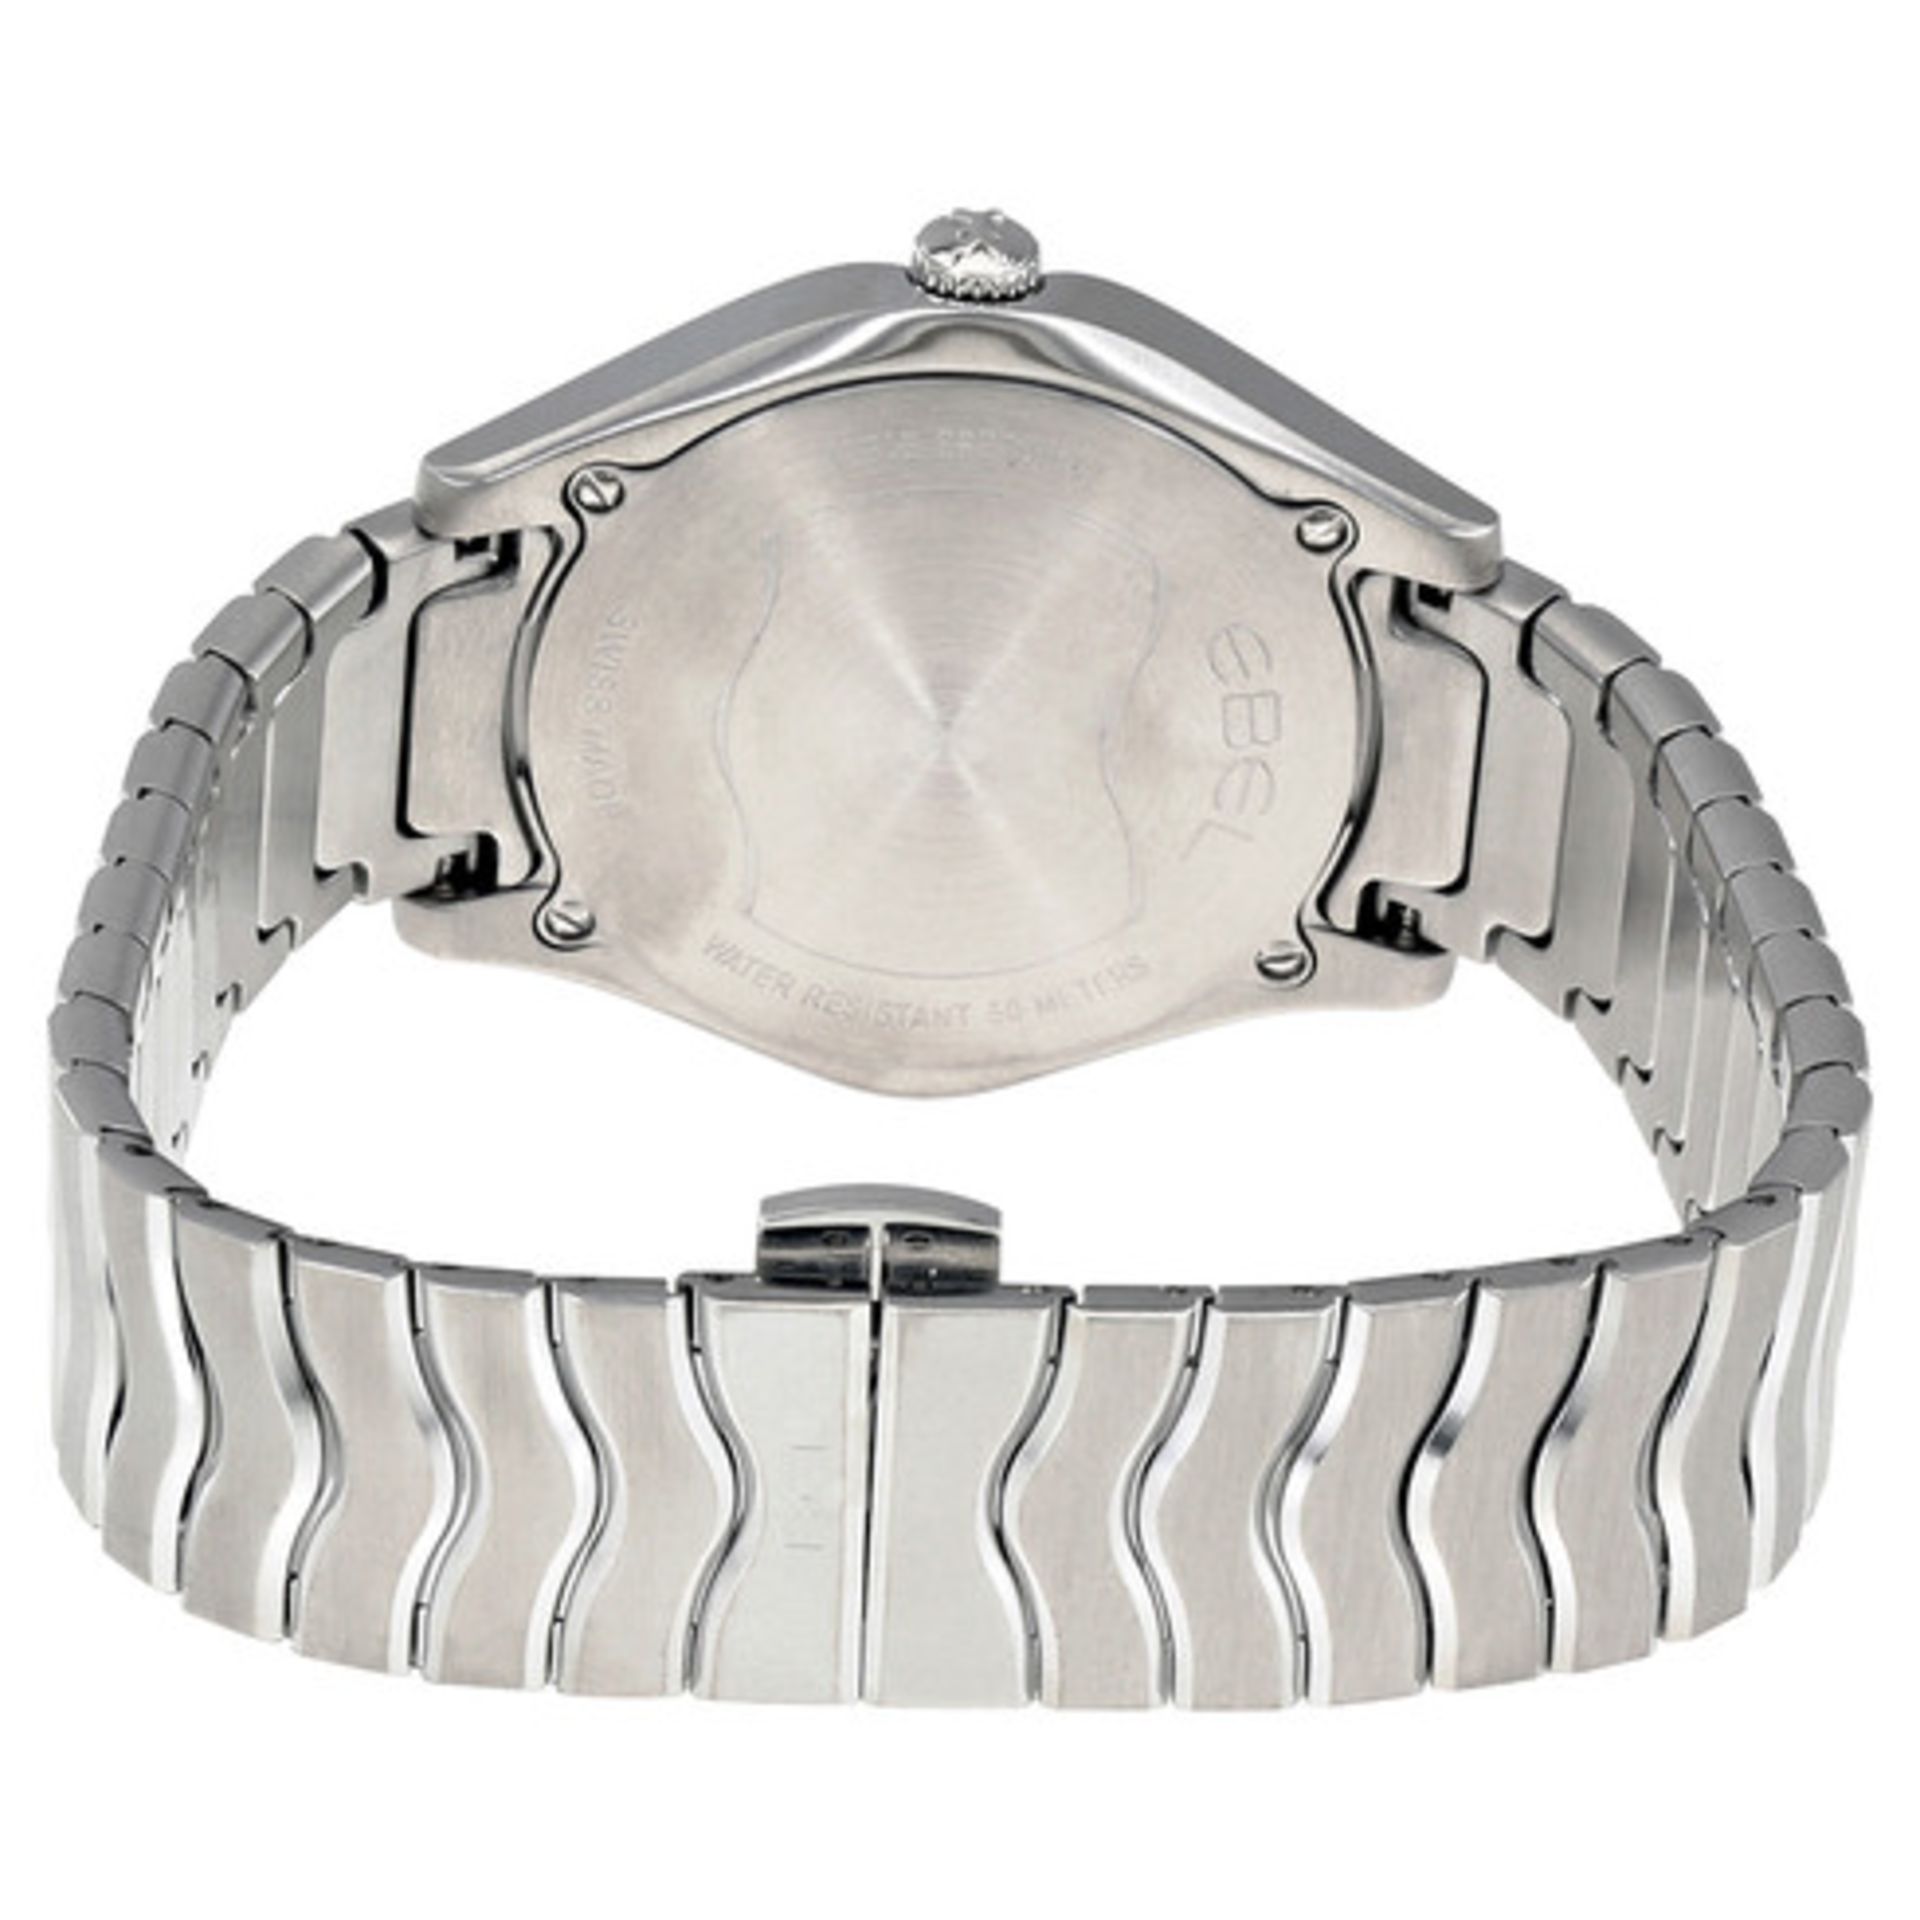 Ebel Ladies Midi 35mm Size Wave Range Watch Reference 1216308, Stainless Steel Bracelet & Case, - Image 4 of 6